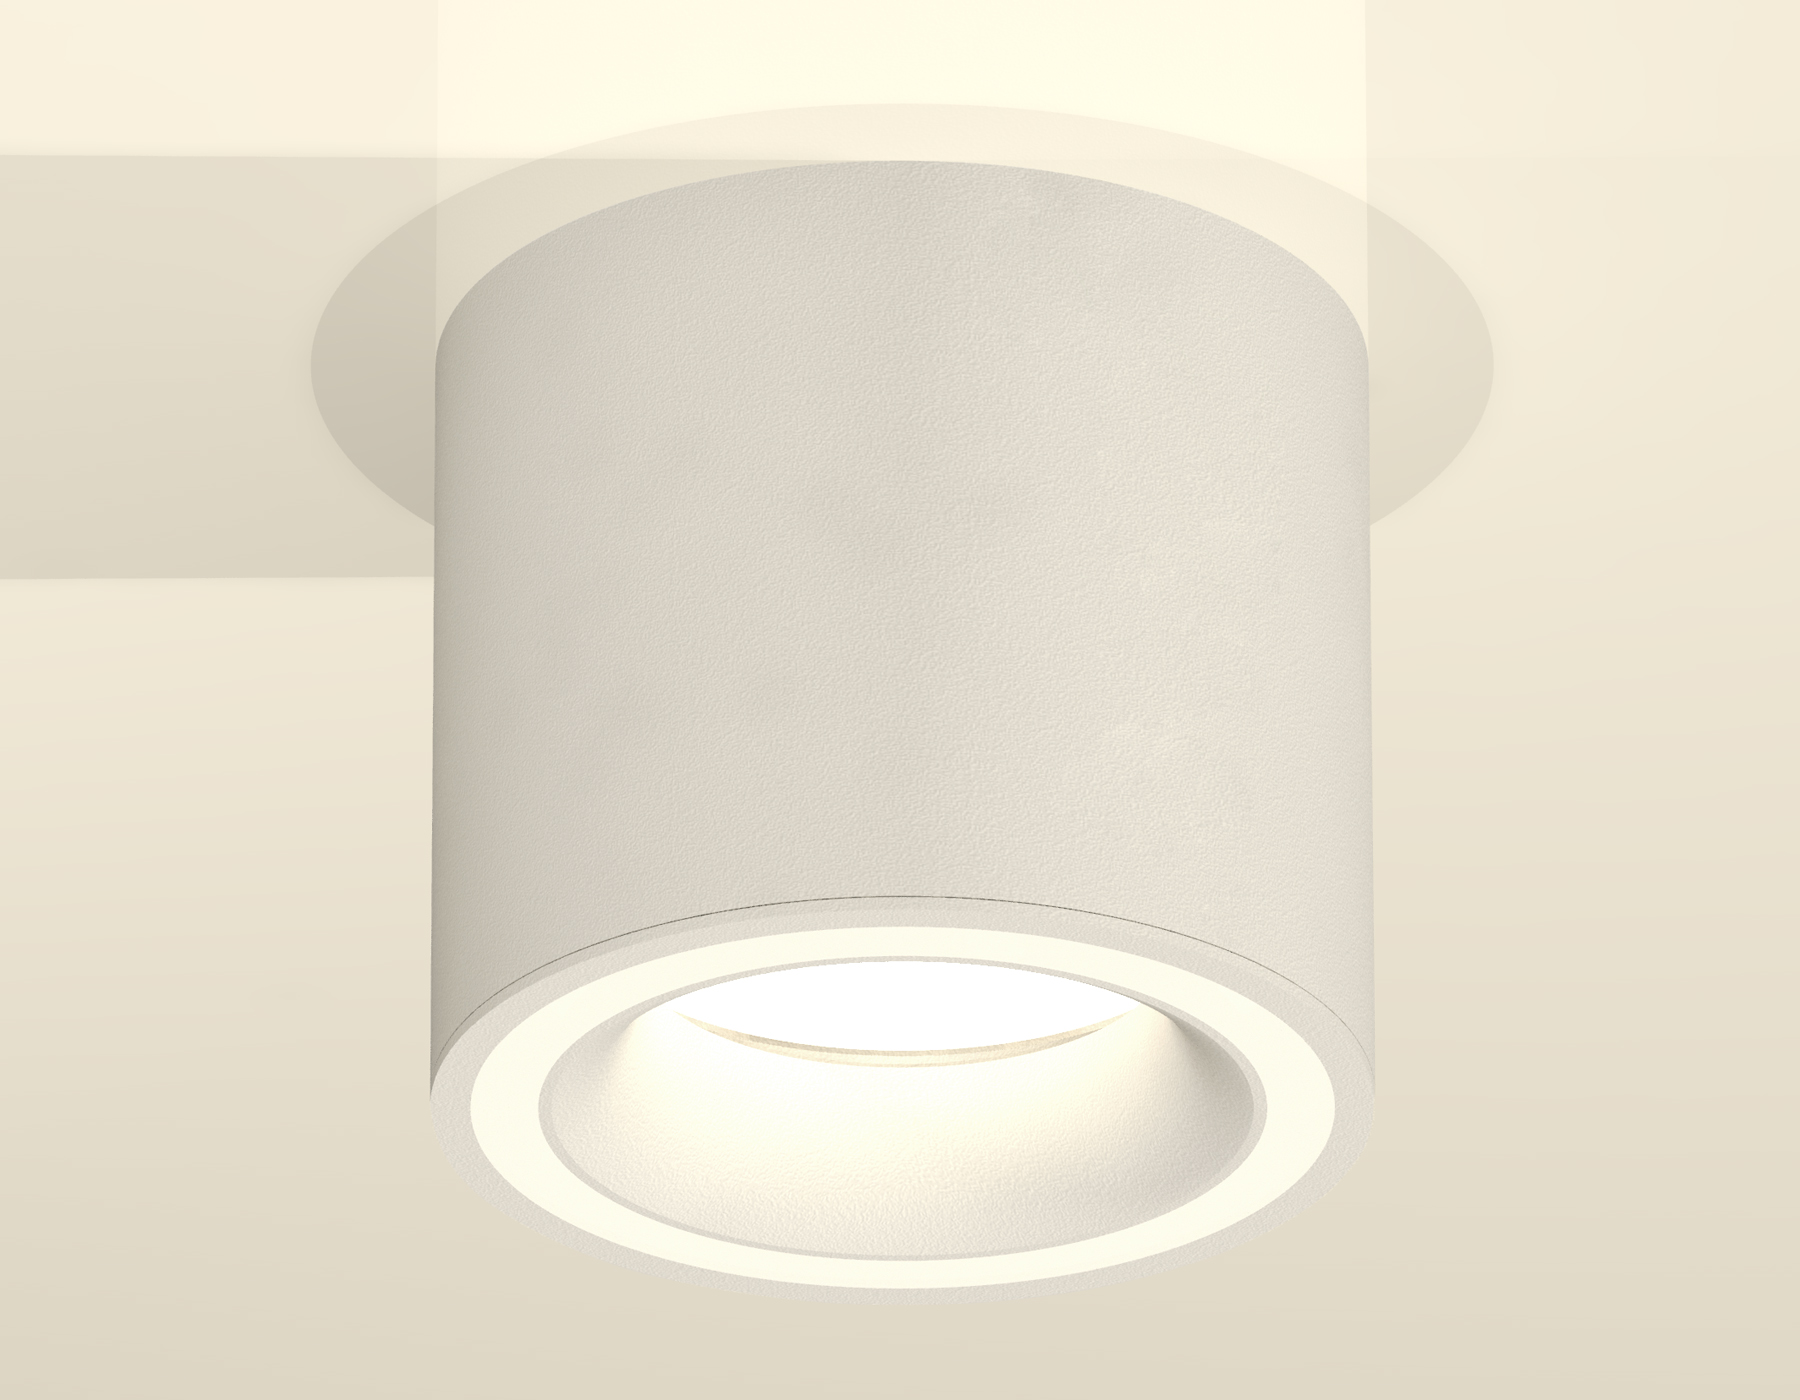 Накладной светильник Ambrella Light Techno XS7401040 (C7401, N7110)